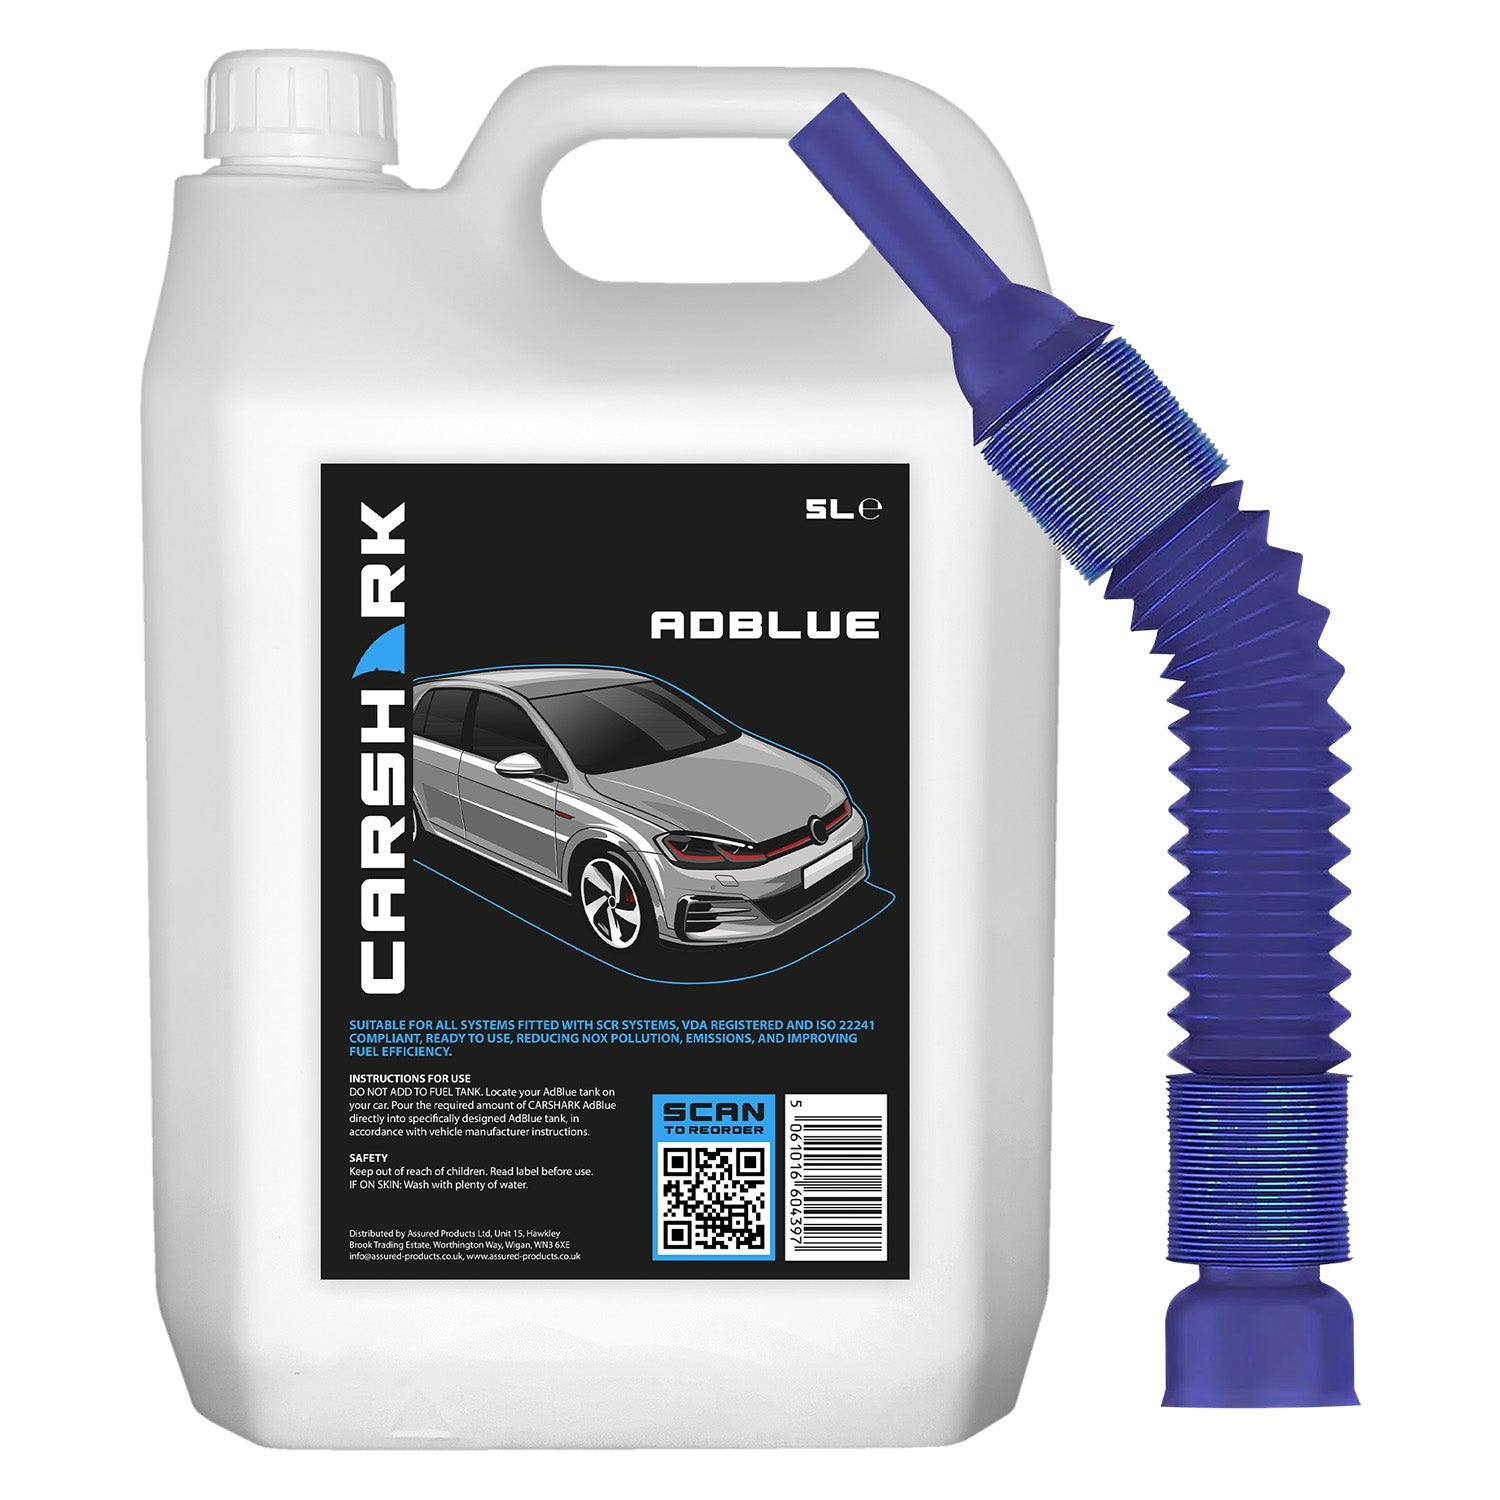 CARSHARK AdBlue Diesel Exhaust Fluid Additive, 5 Litres, Easy Pour Spout